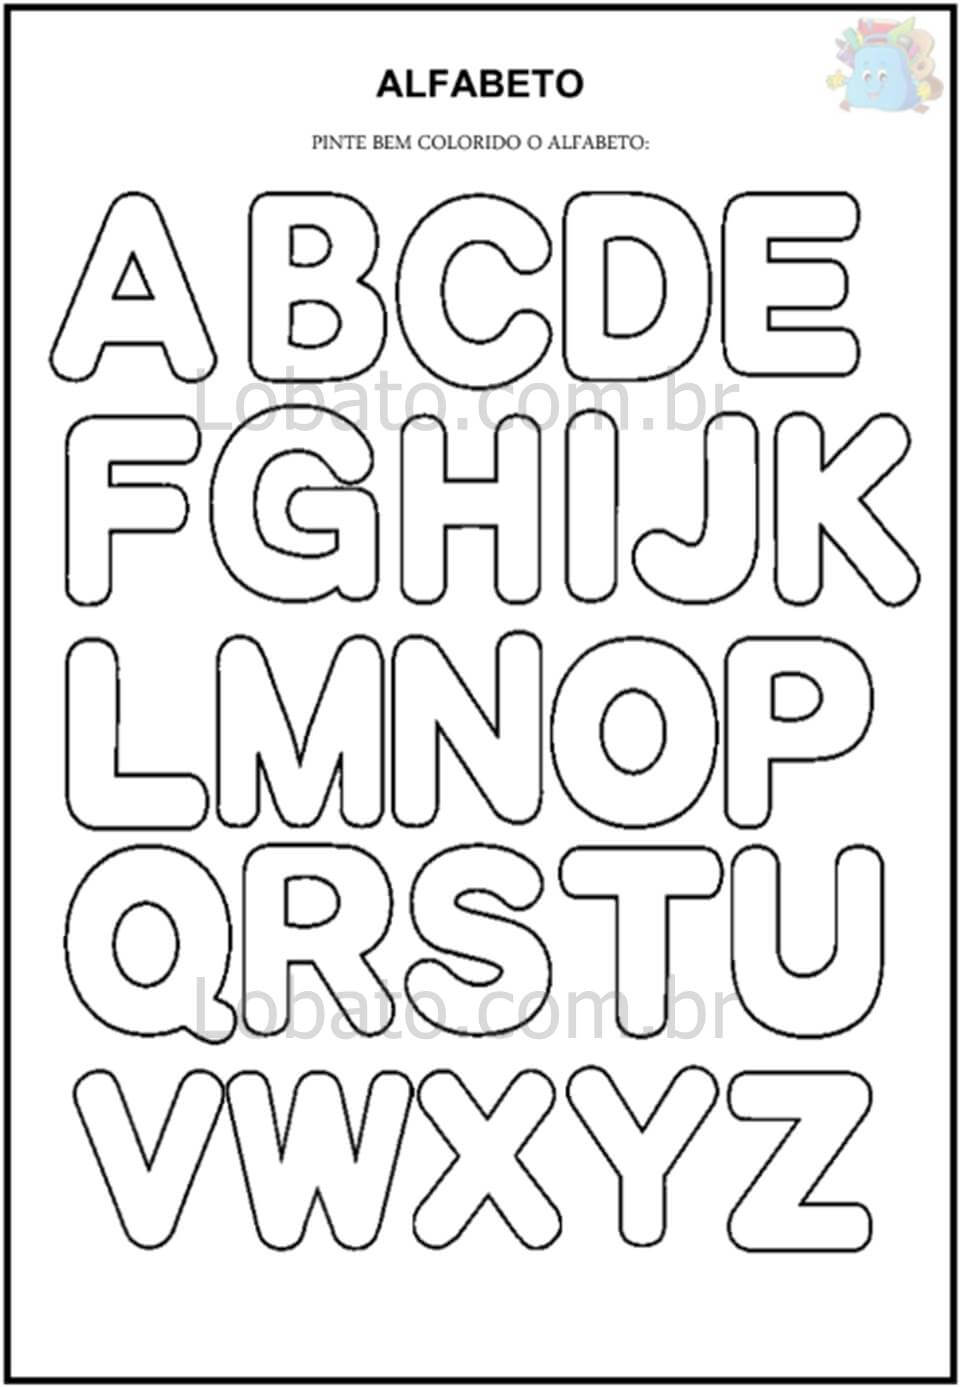 letras do alfabeto para imprimir